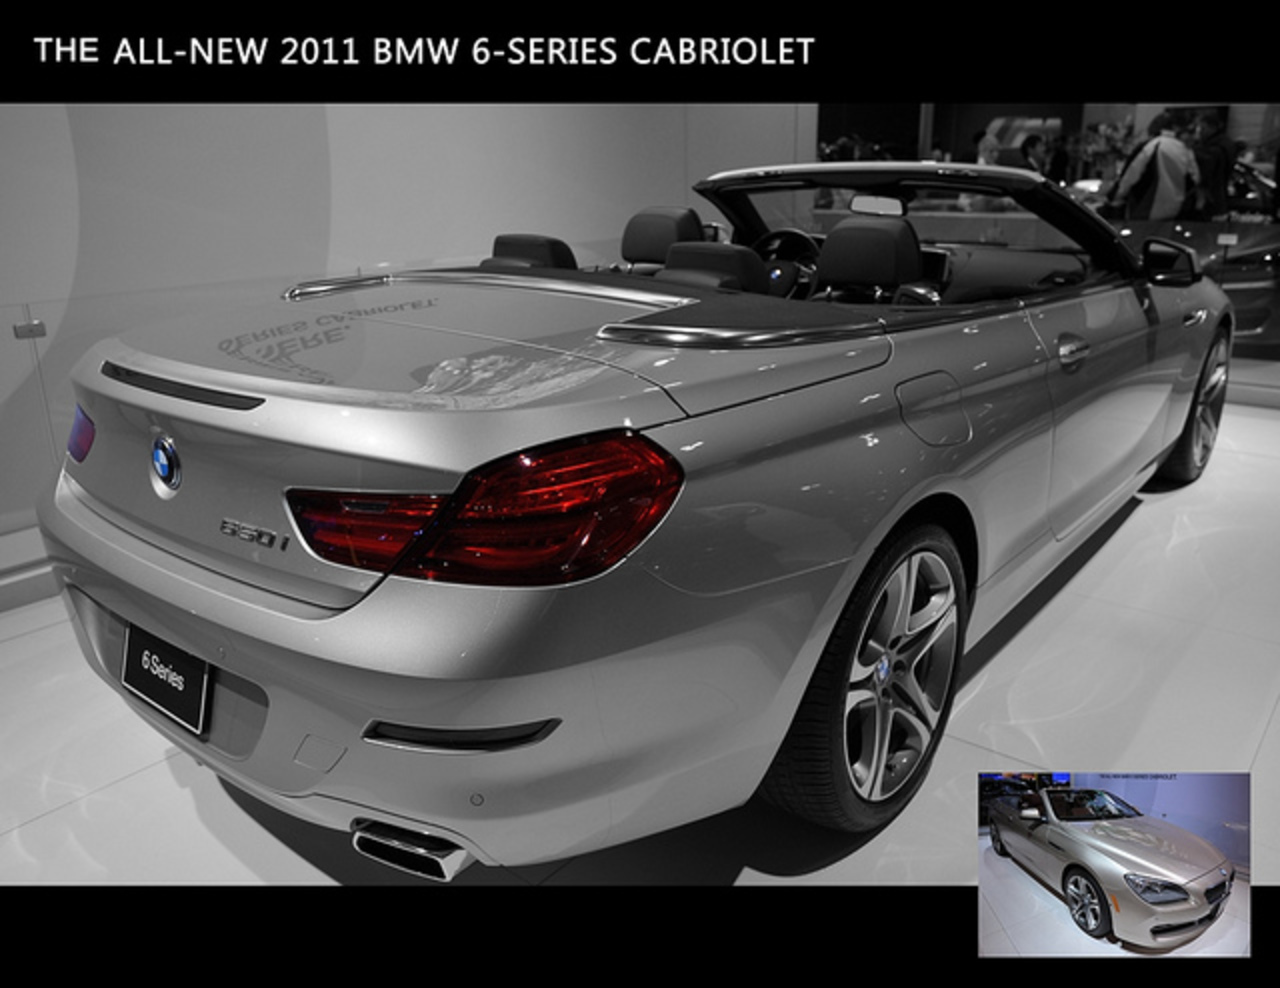 2011 BMW 6-Series Cabriolet | Flickr - Photo Sharing!